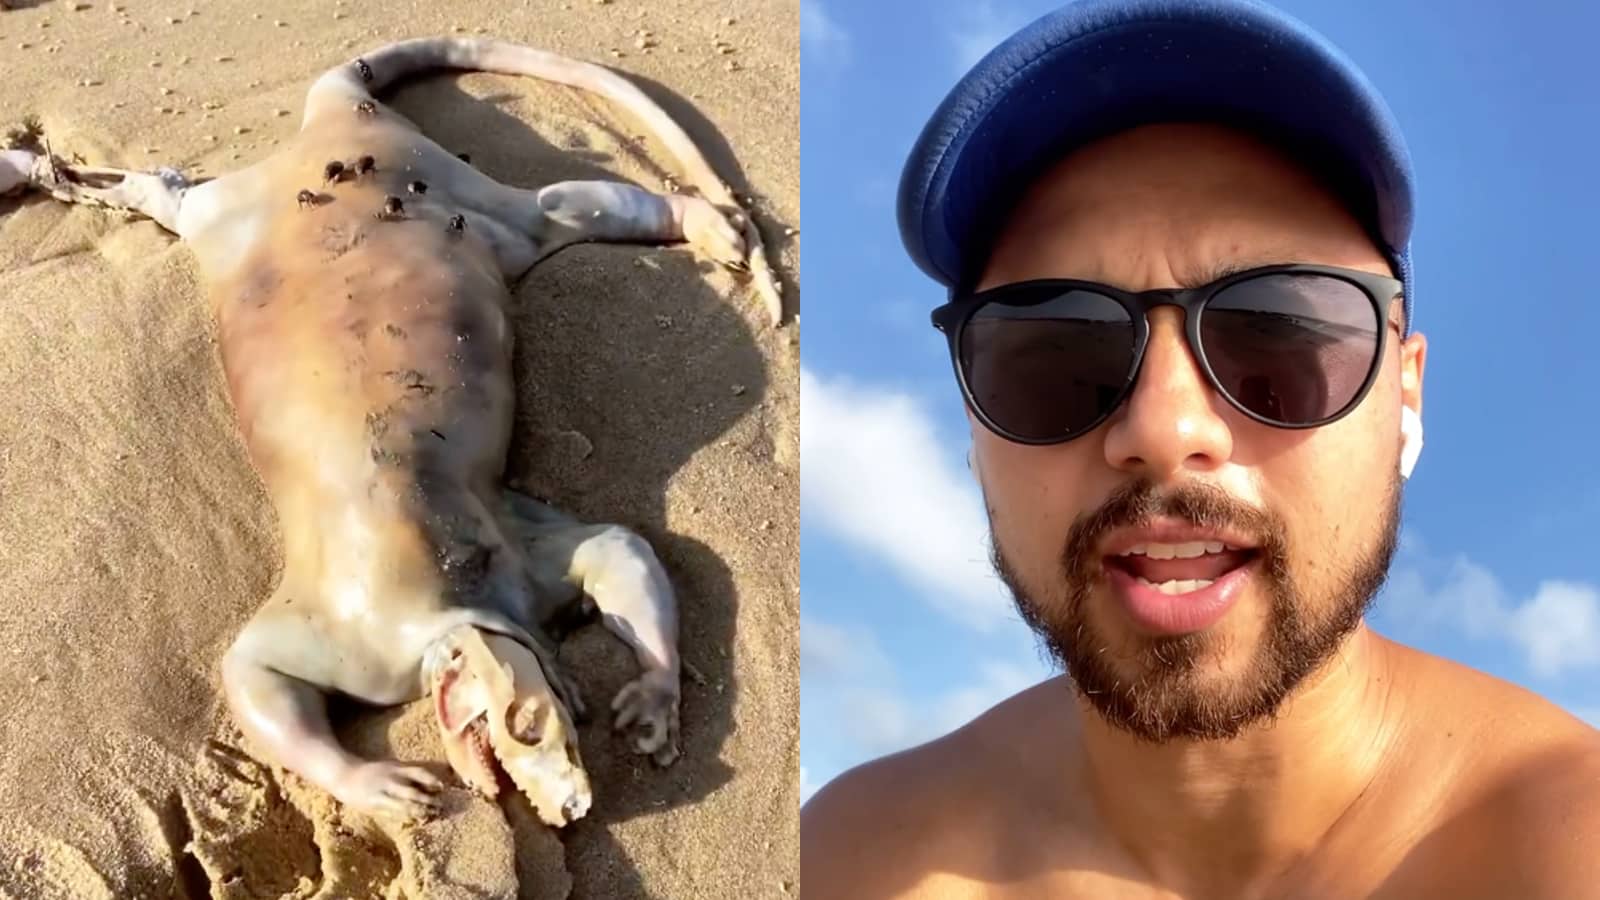 Instagram user Alex Tan next to Australian beach creature